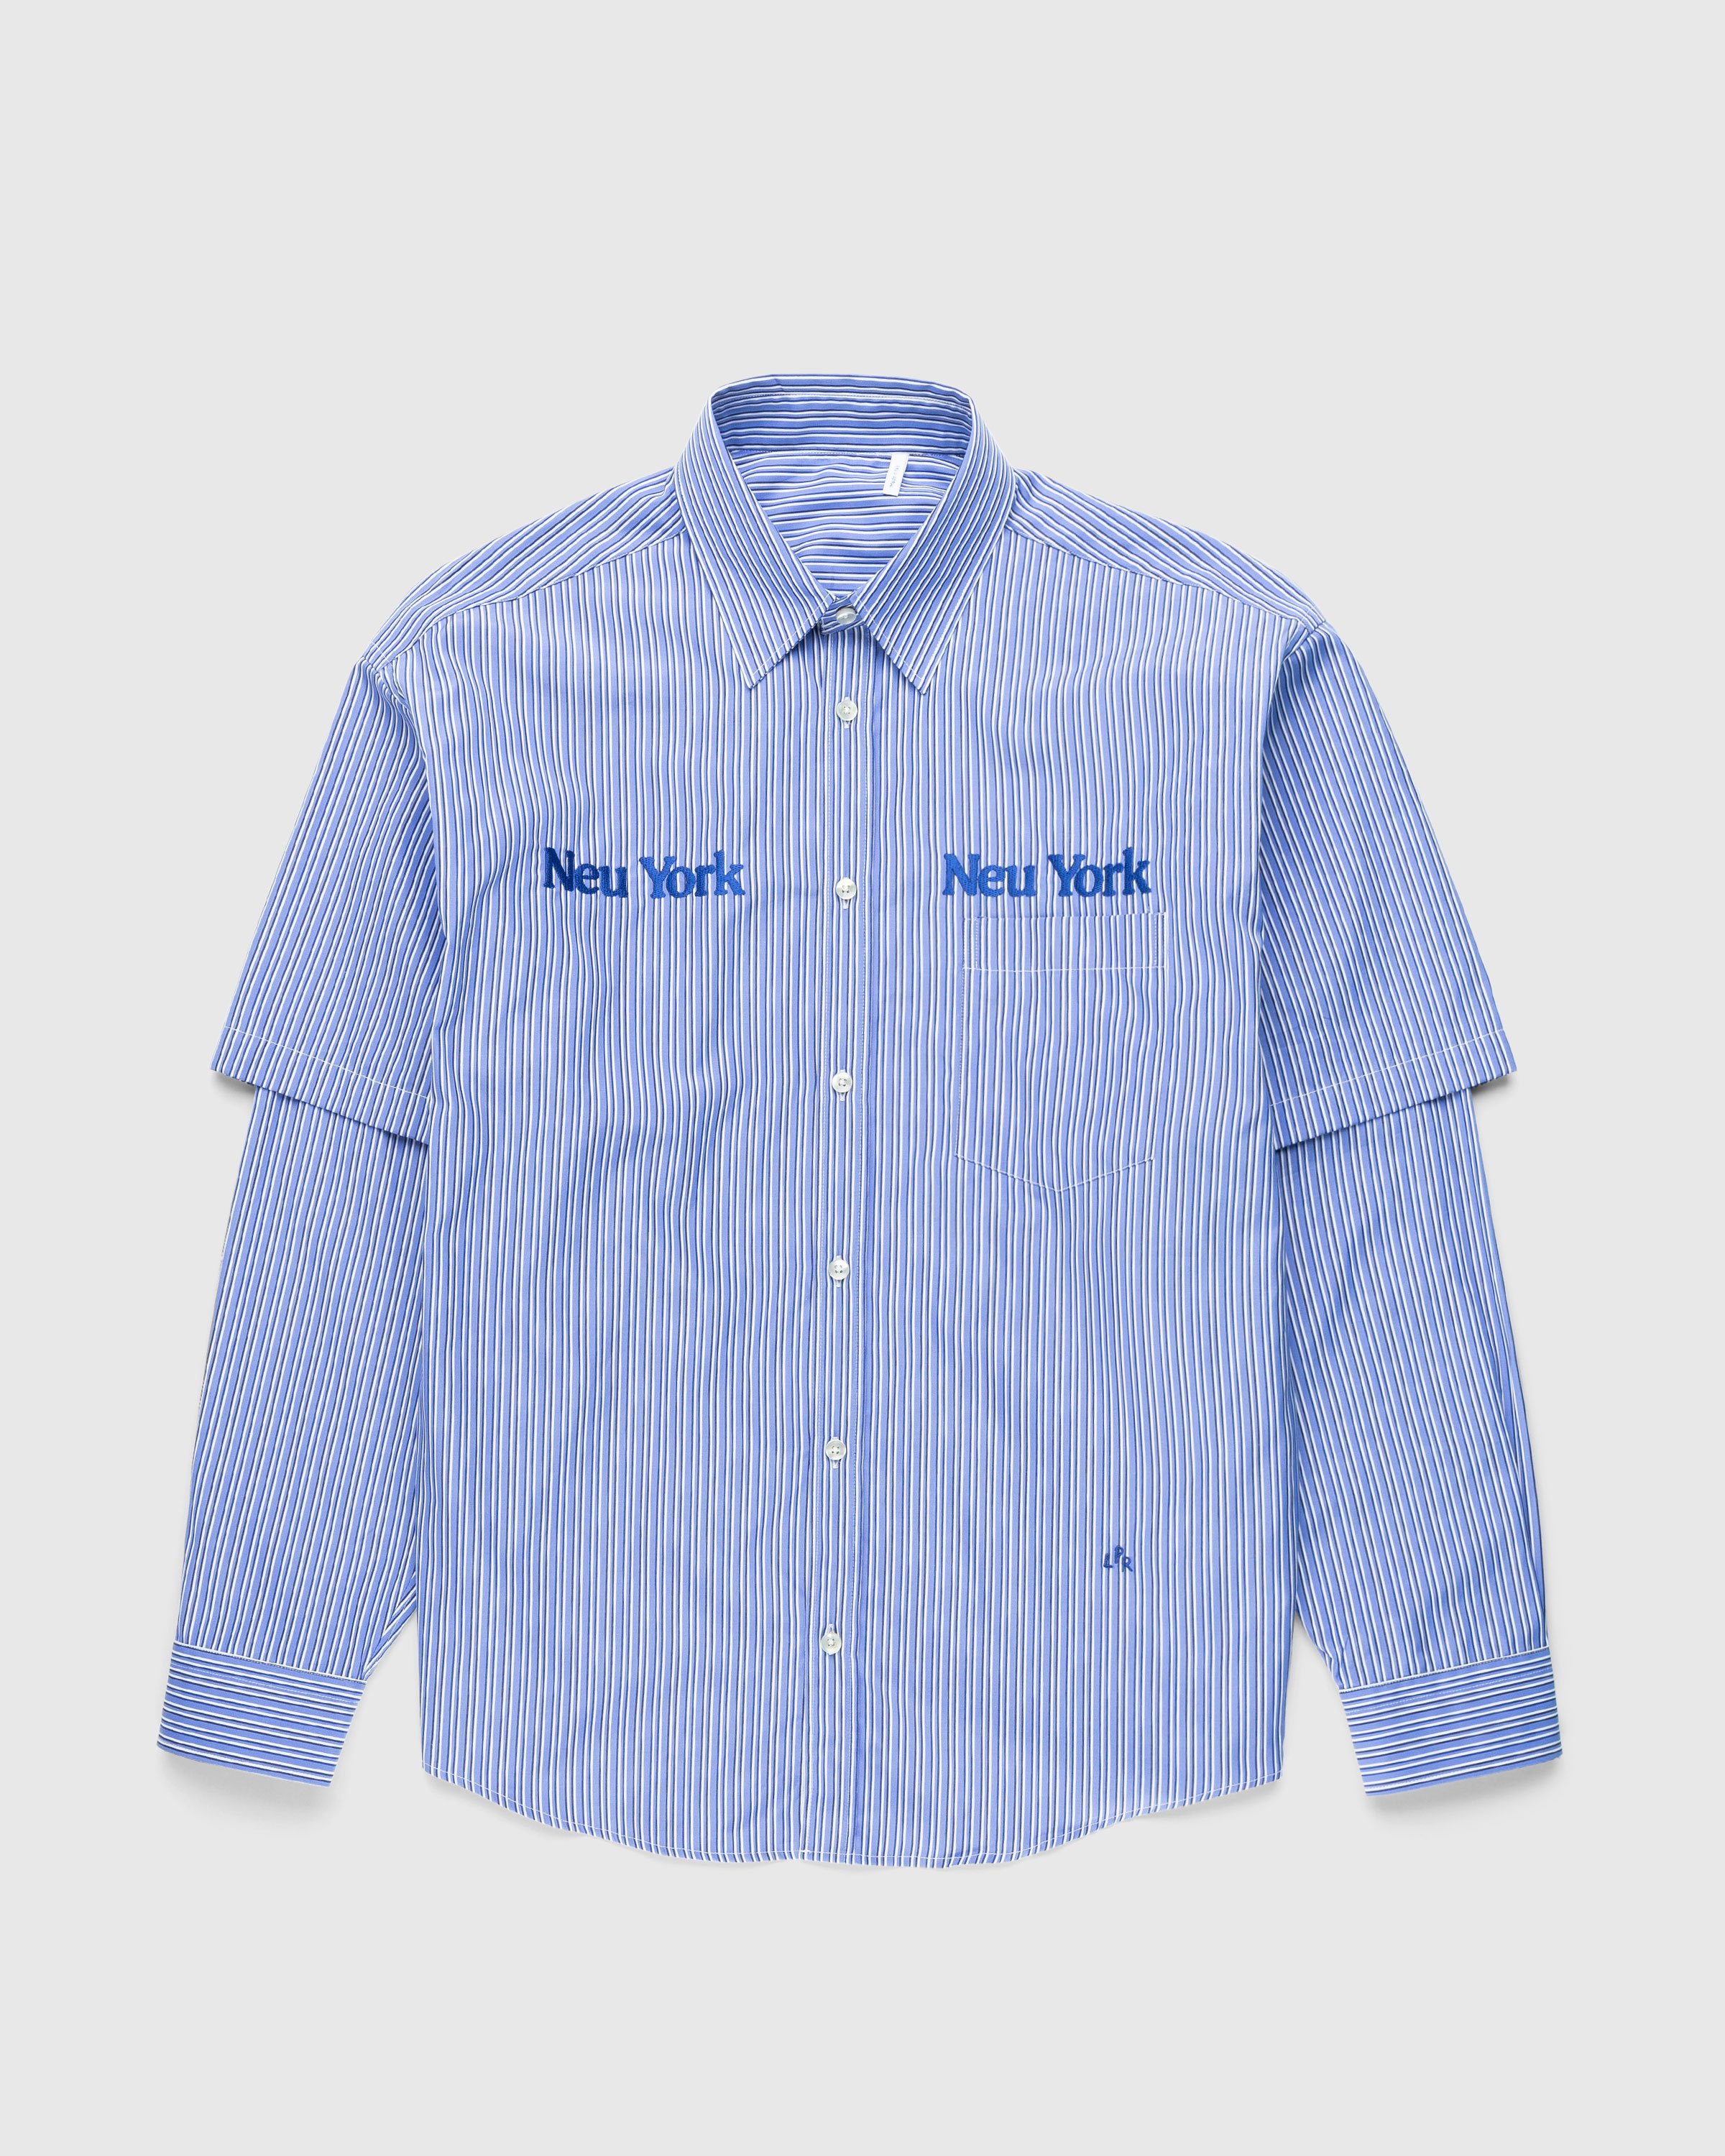 Highsnobiety x Le Père - "Neu York Neu York" Double Sleeve Shirt - Clothing - Blue - Image 1